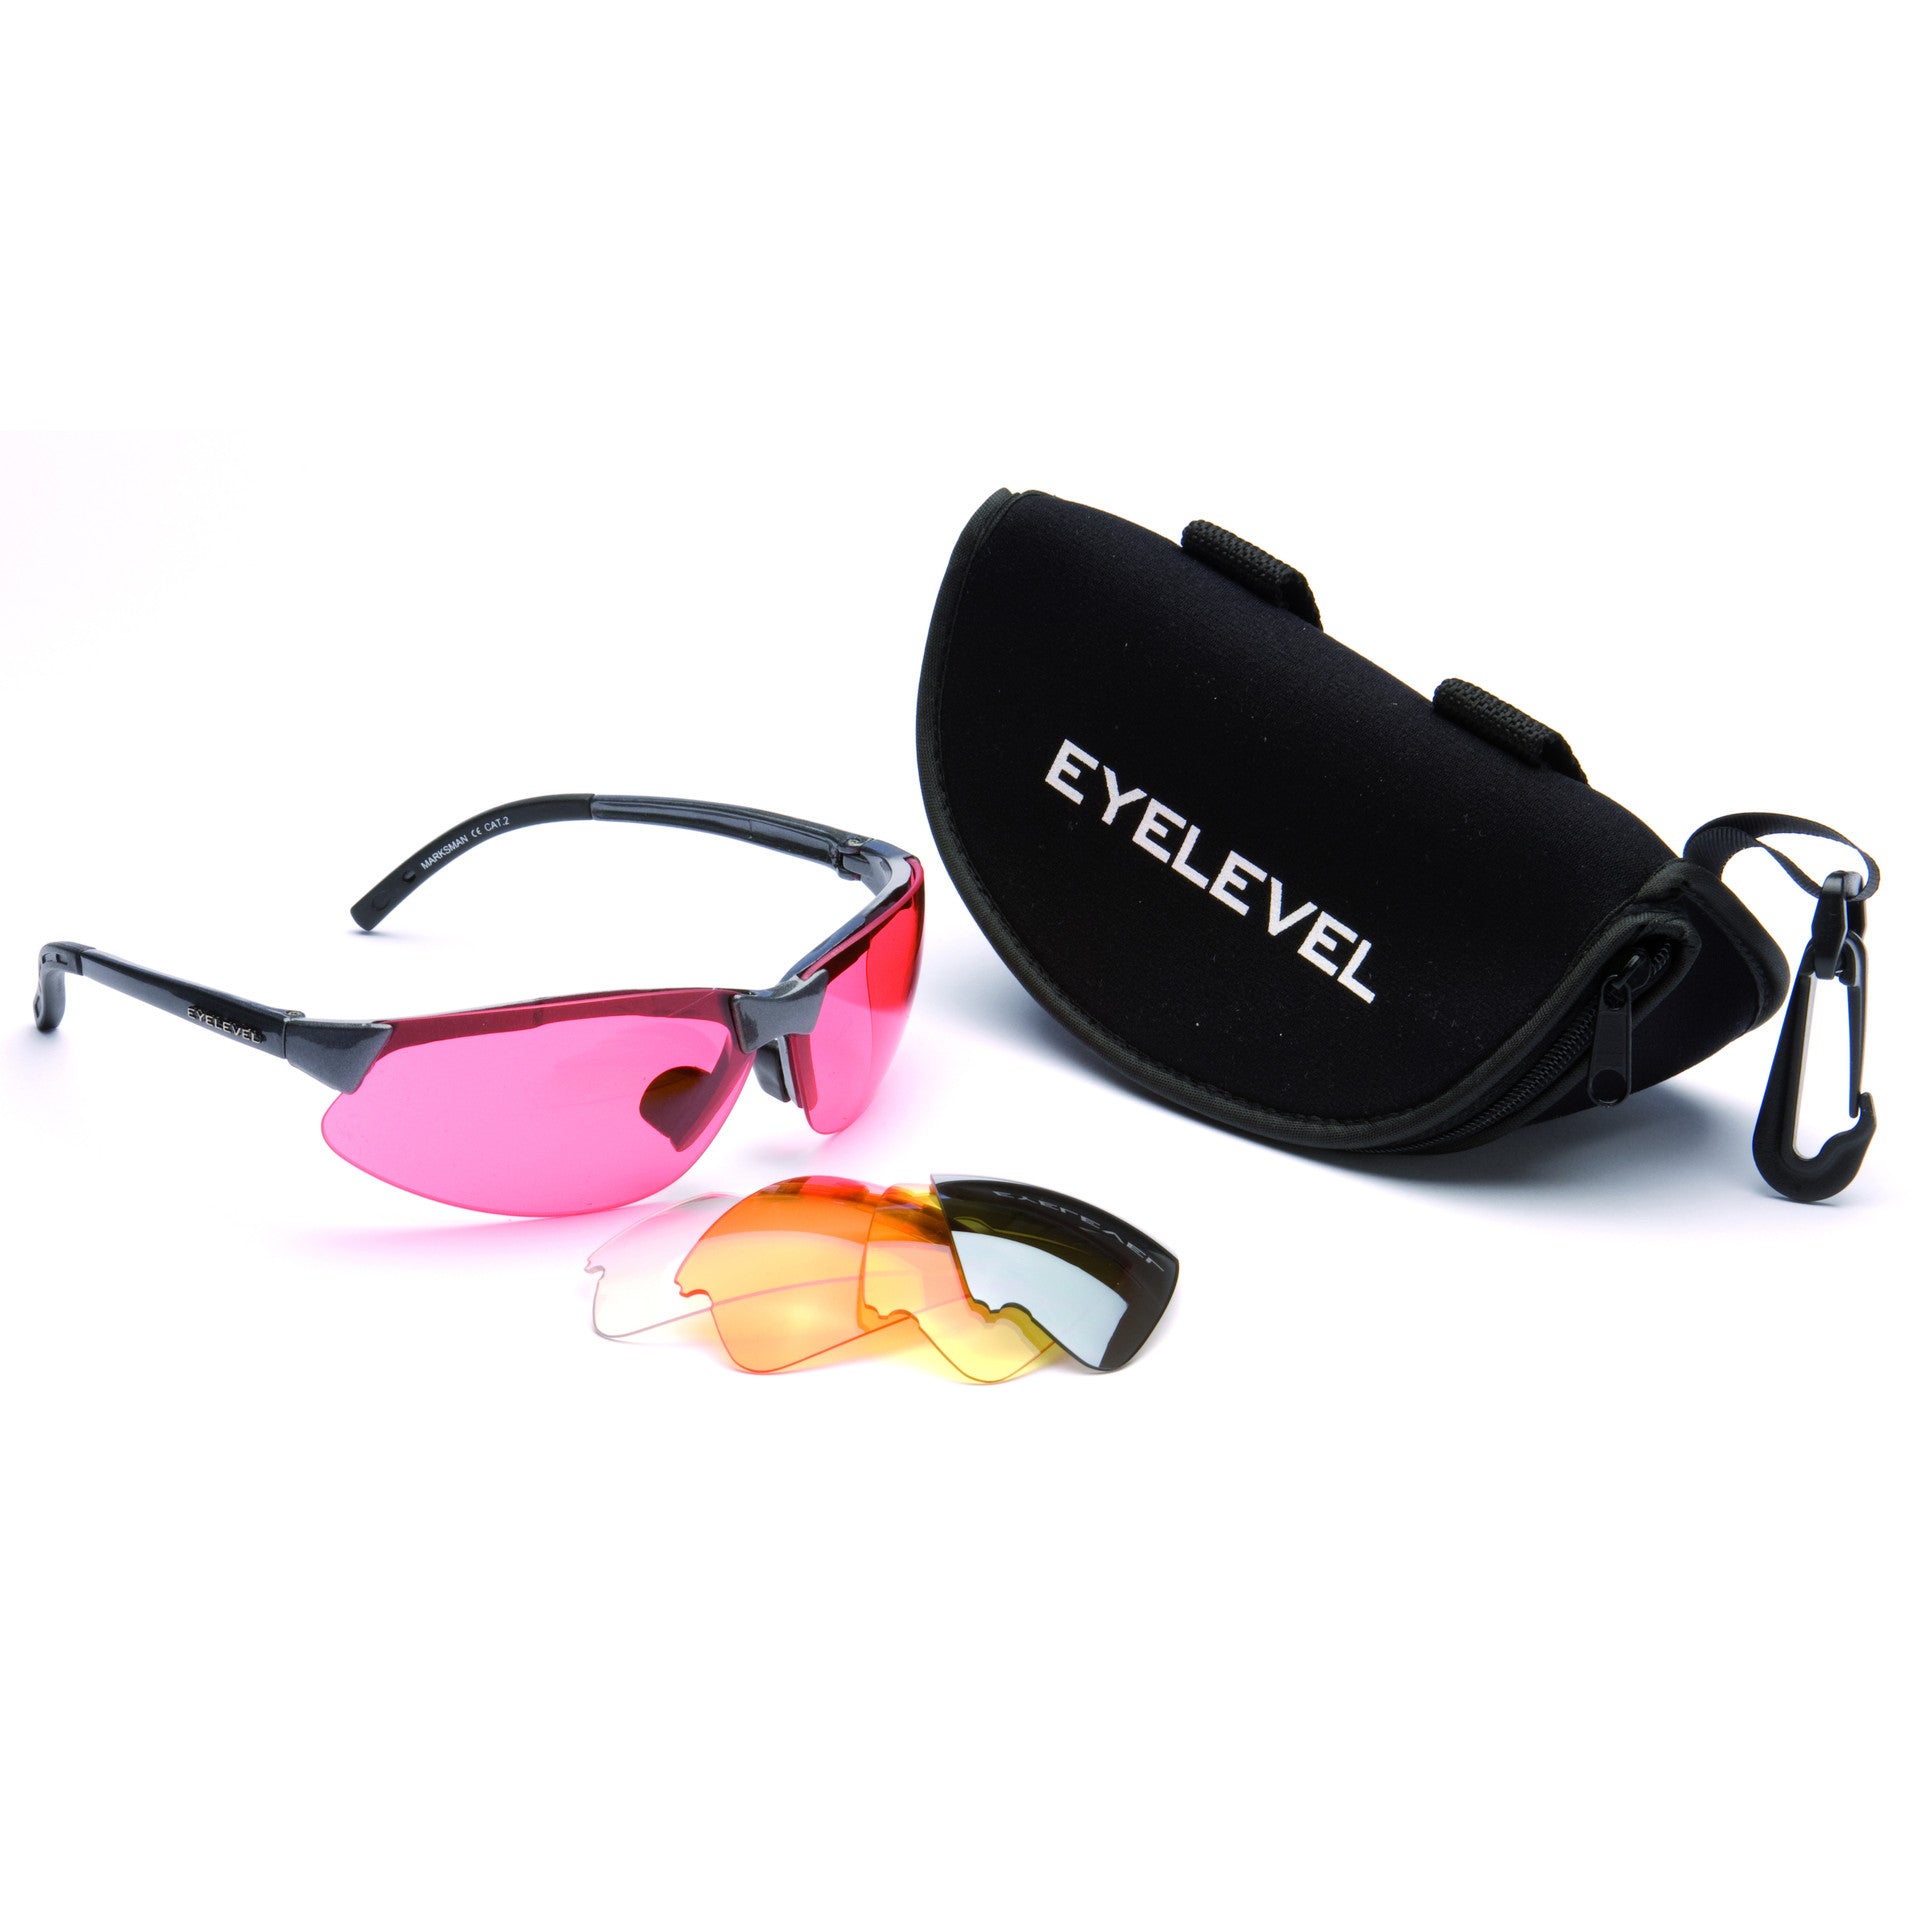 Eyelevel Marksman Shooting Glasses Kit